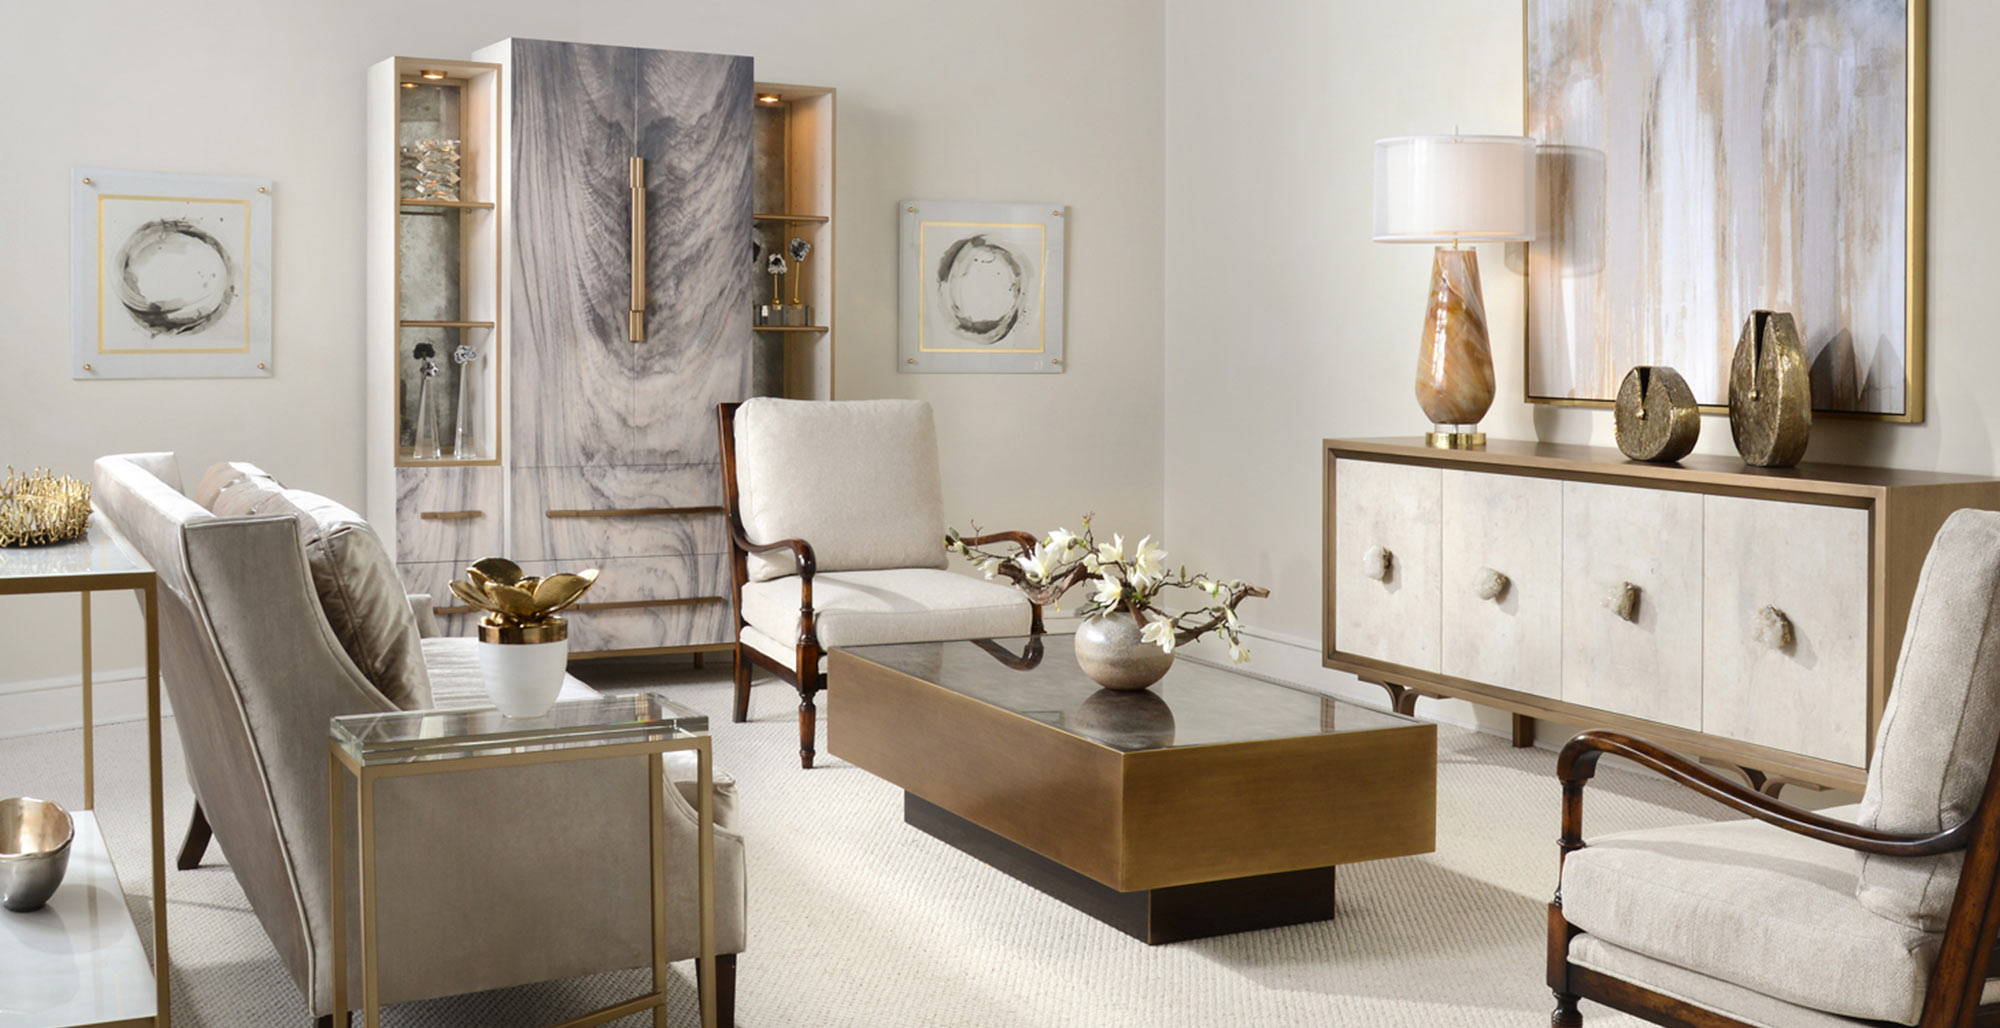 John-Richard Furniture, Wall Art & Home Accessories - Lounge Scheme - LuxDeco.com